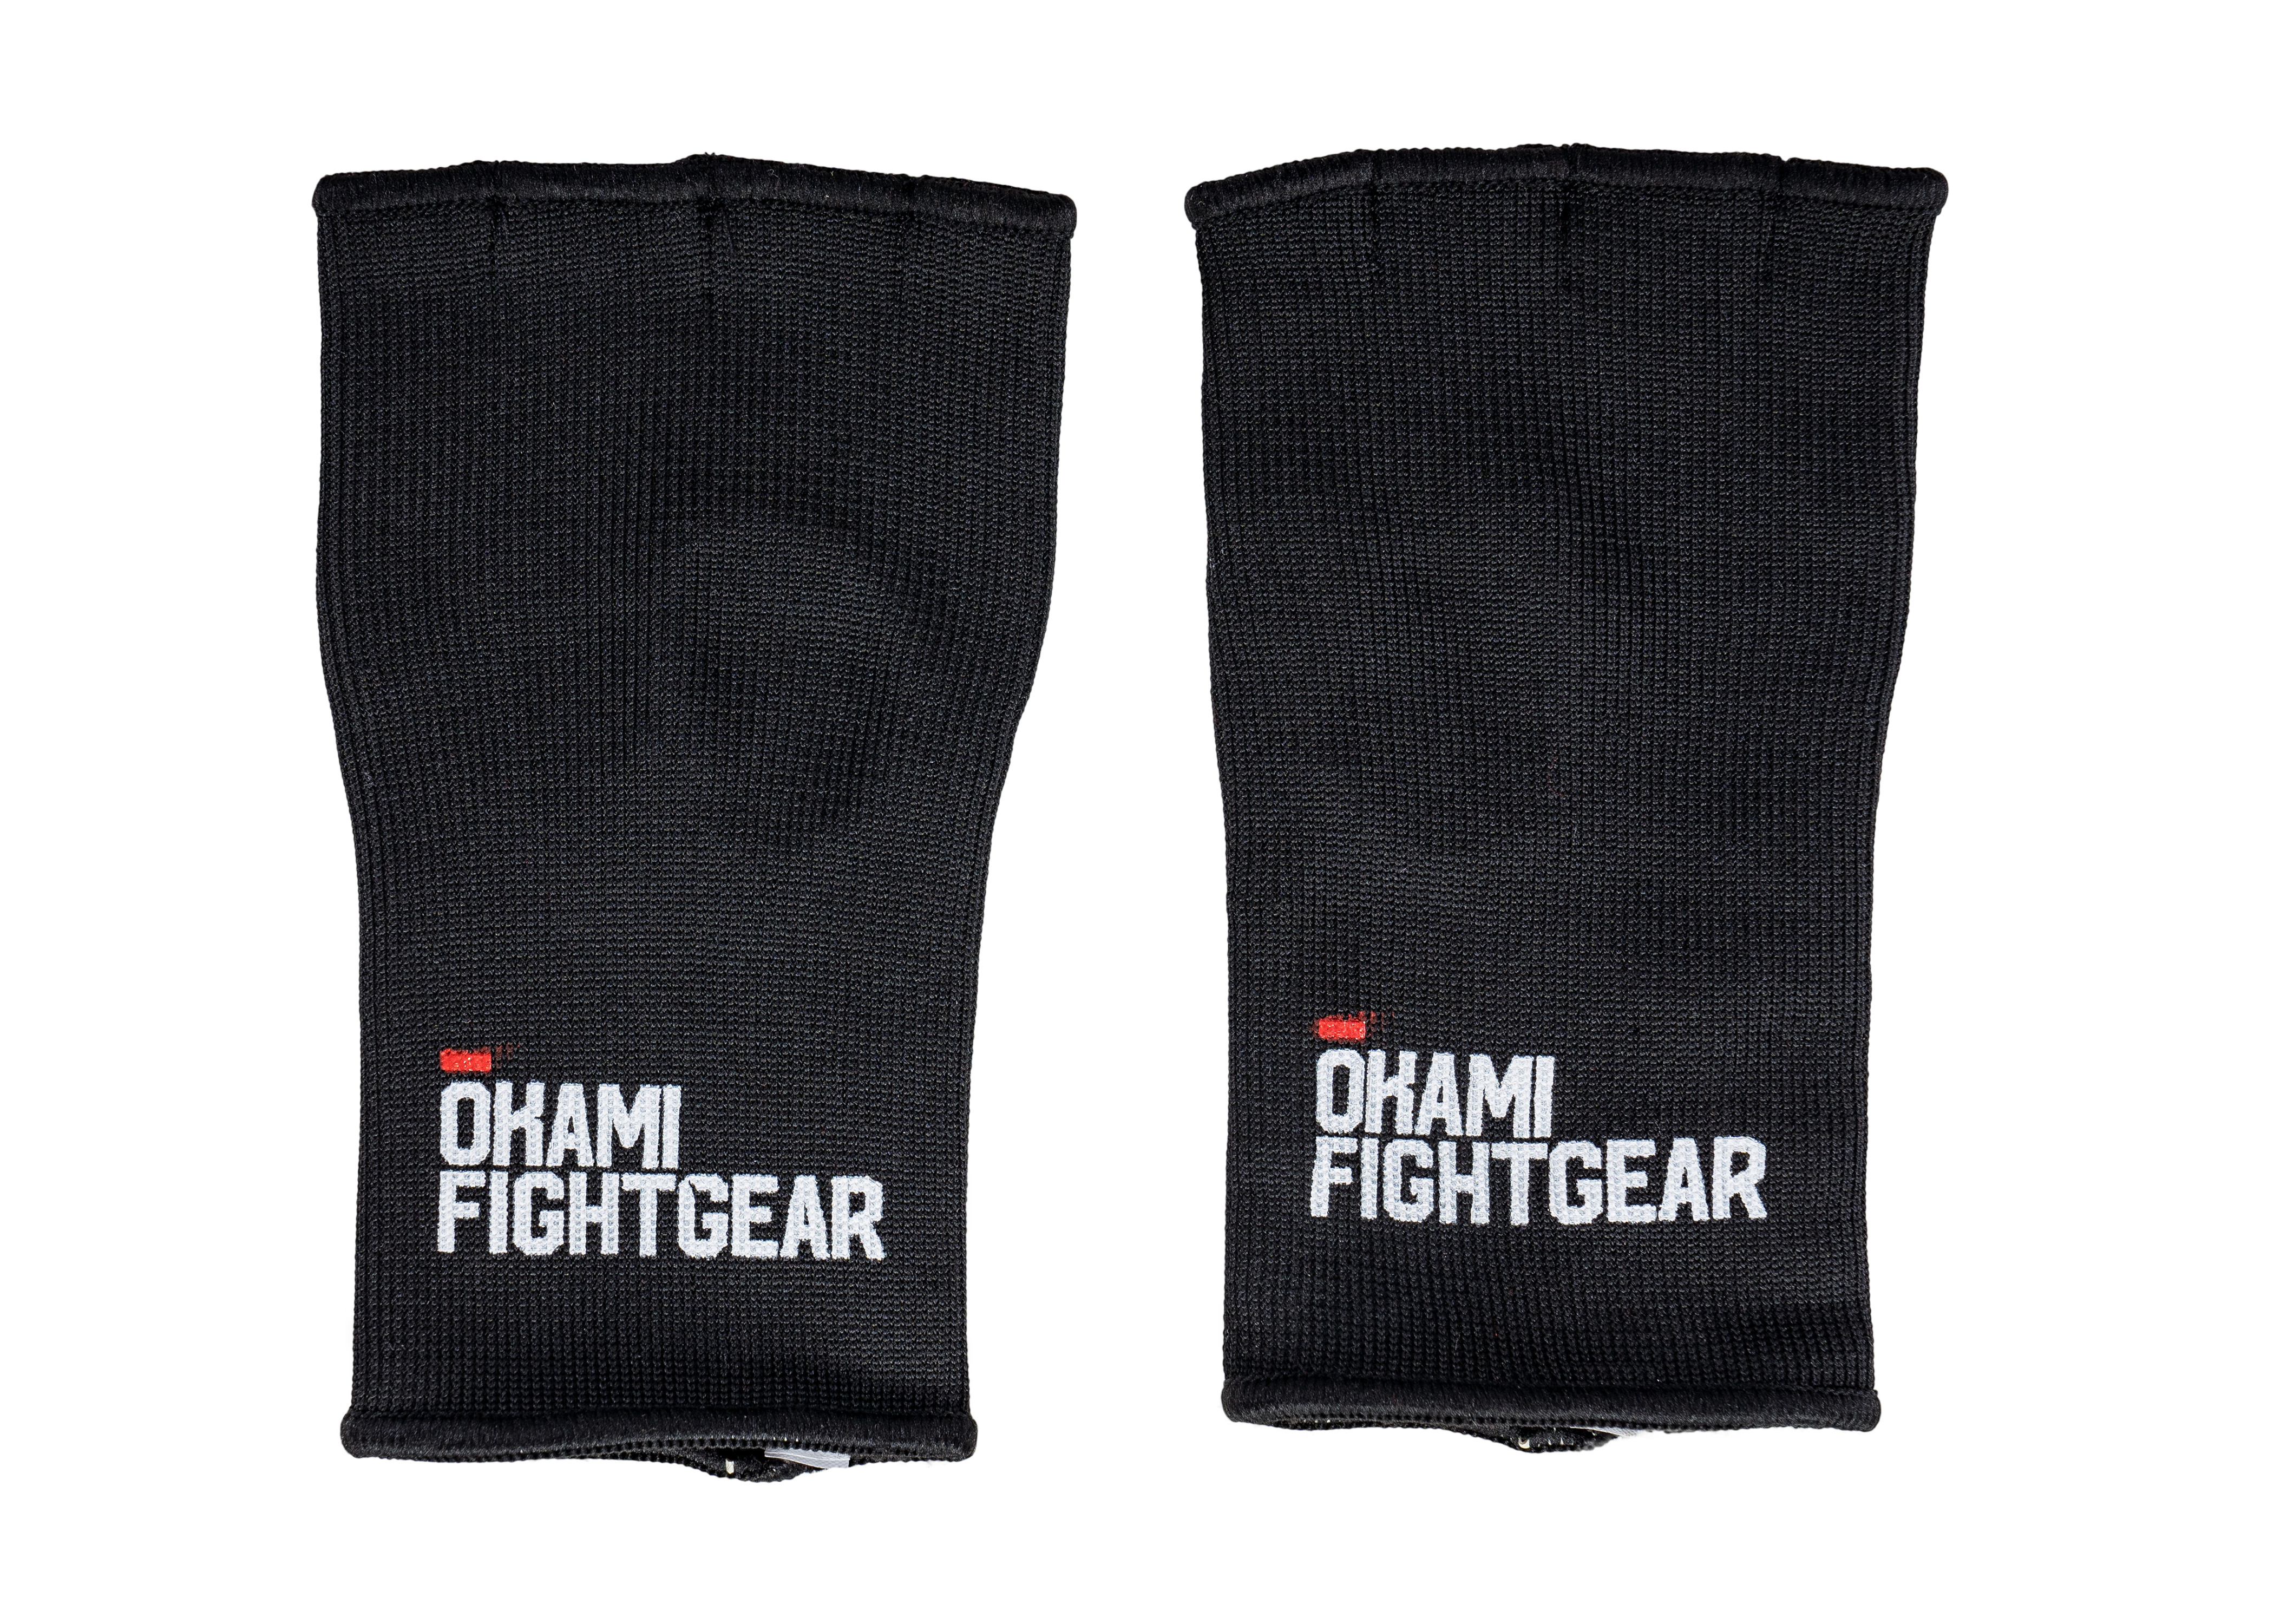 Okami Fightgear Unterhandschuh  (Größe M) (Paar)